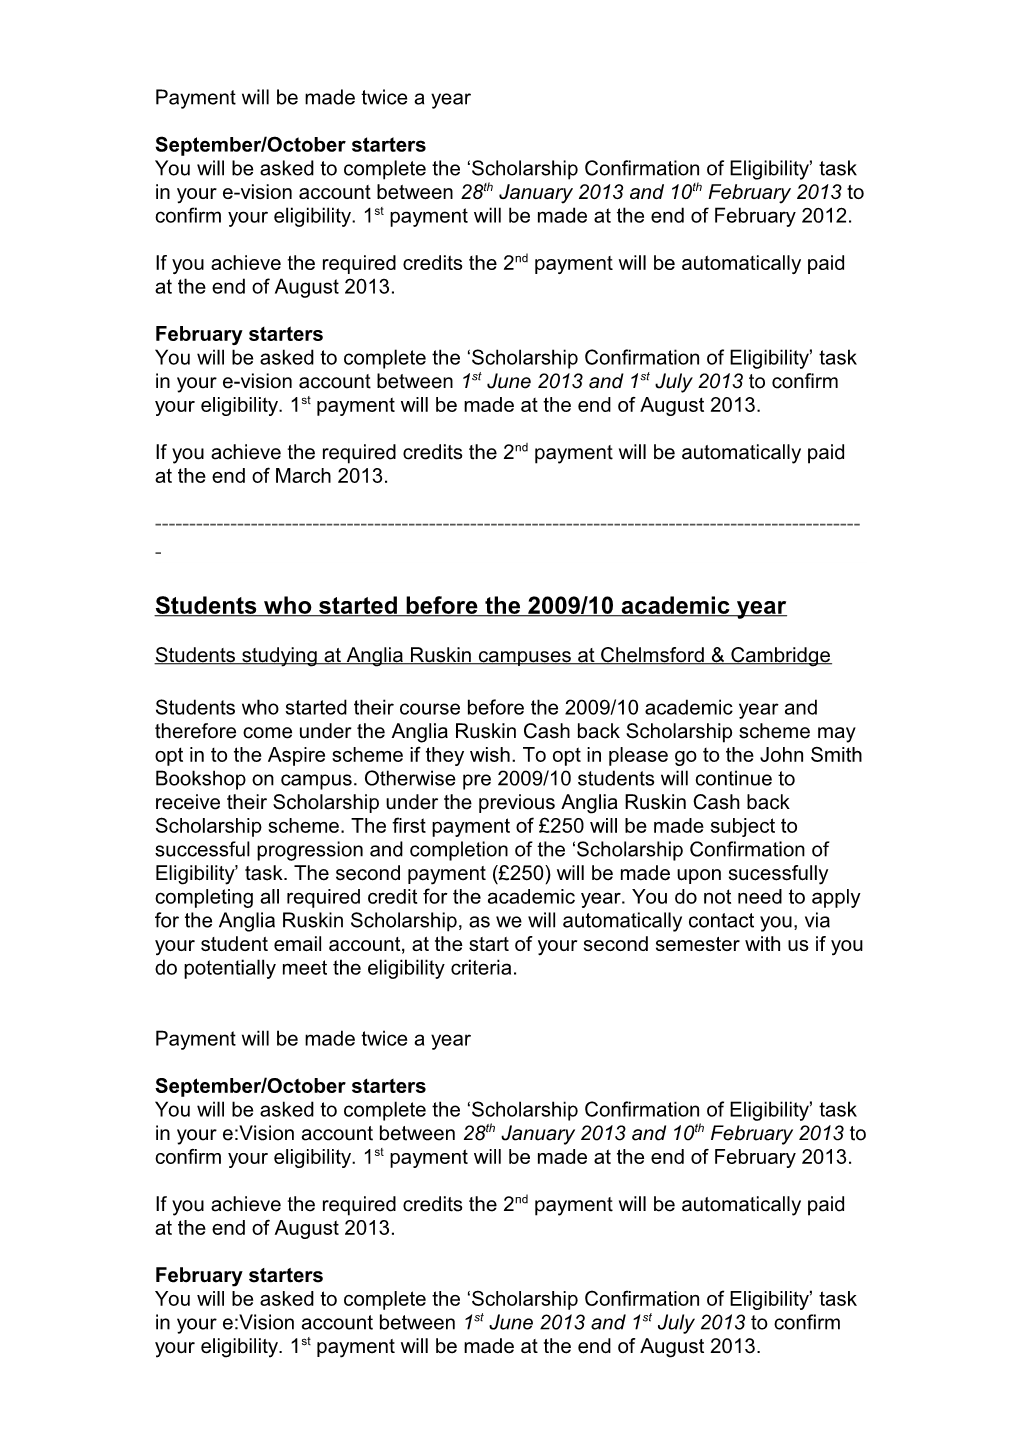 Scholarship for Academic Progress (UK/EU Full-Time Undergraduate Students)